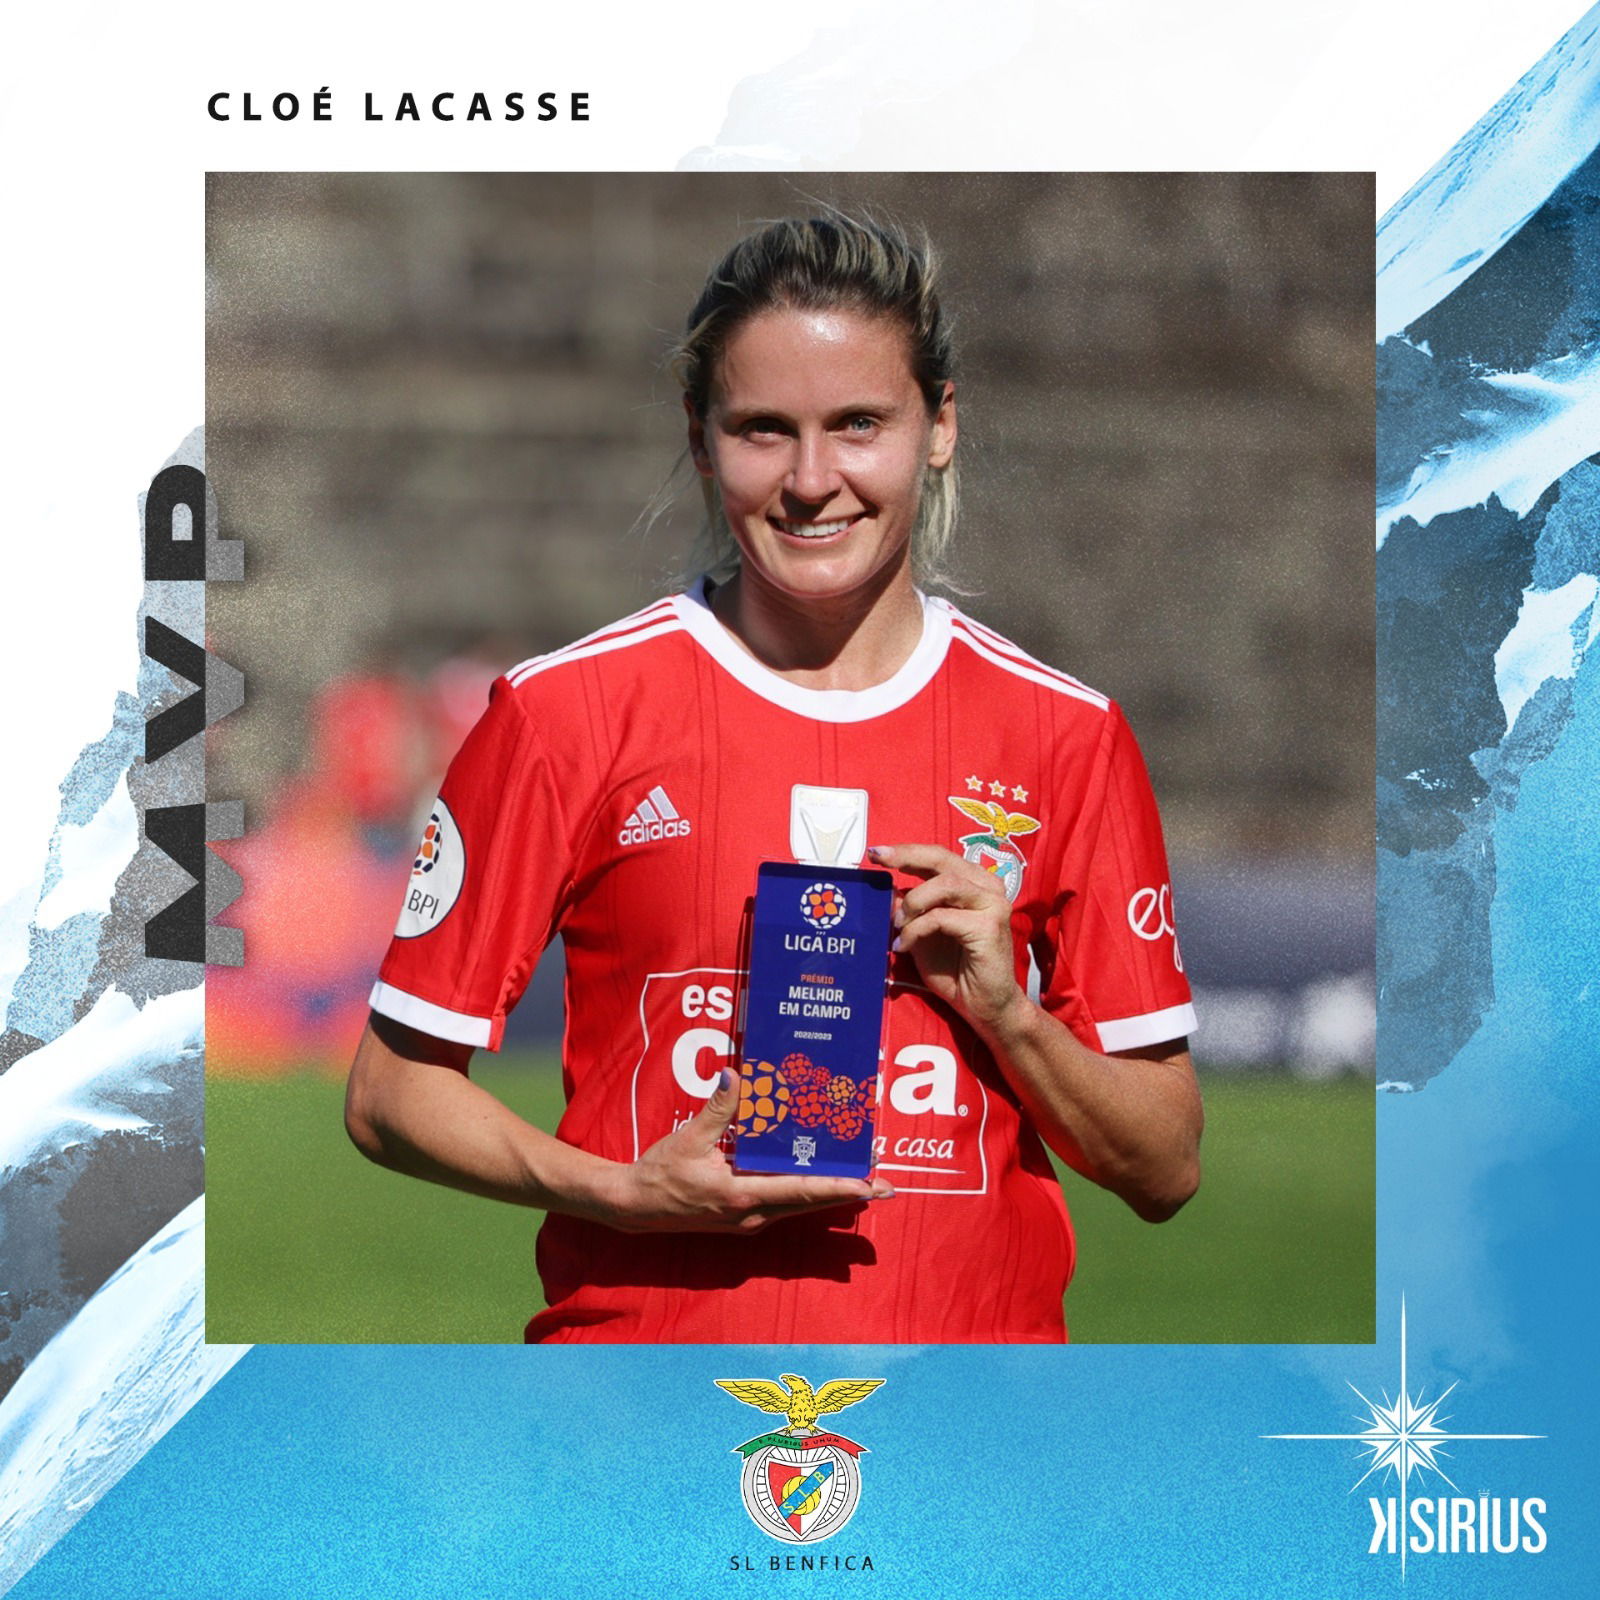 MVP: Cloé Lacasse (SL Benfica)